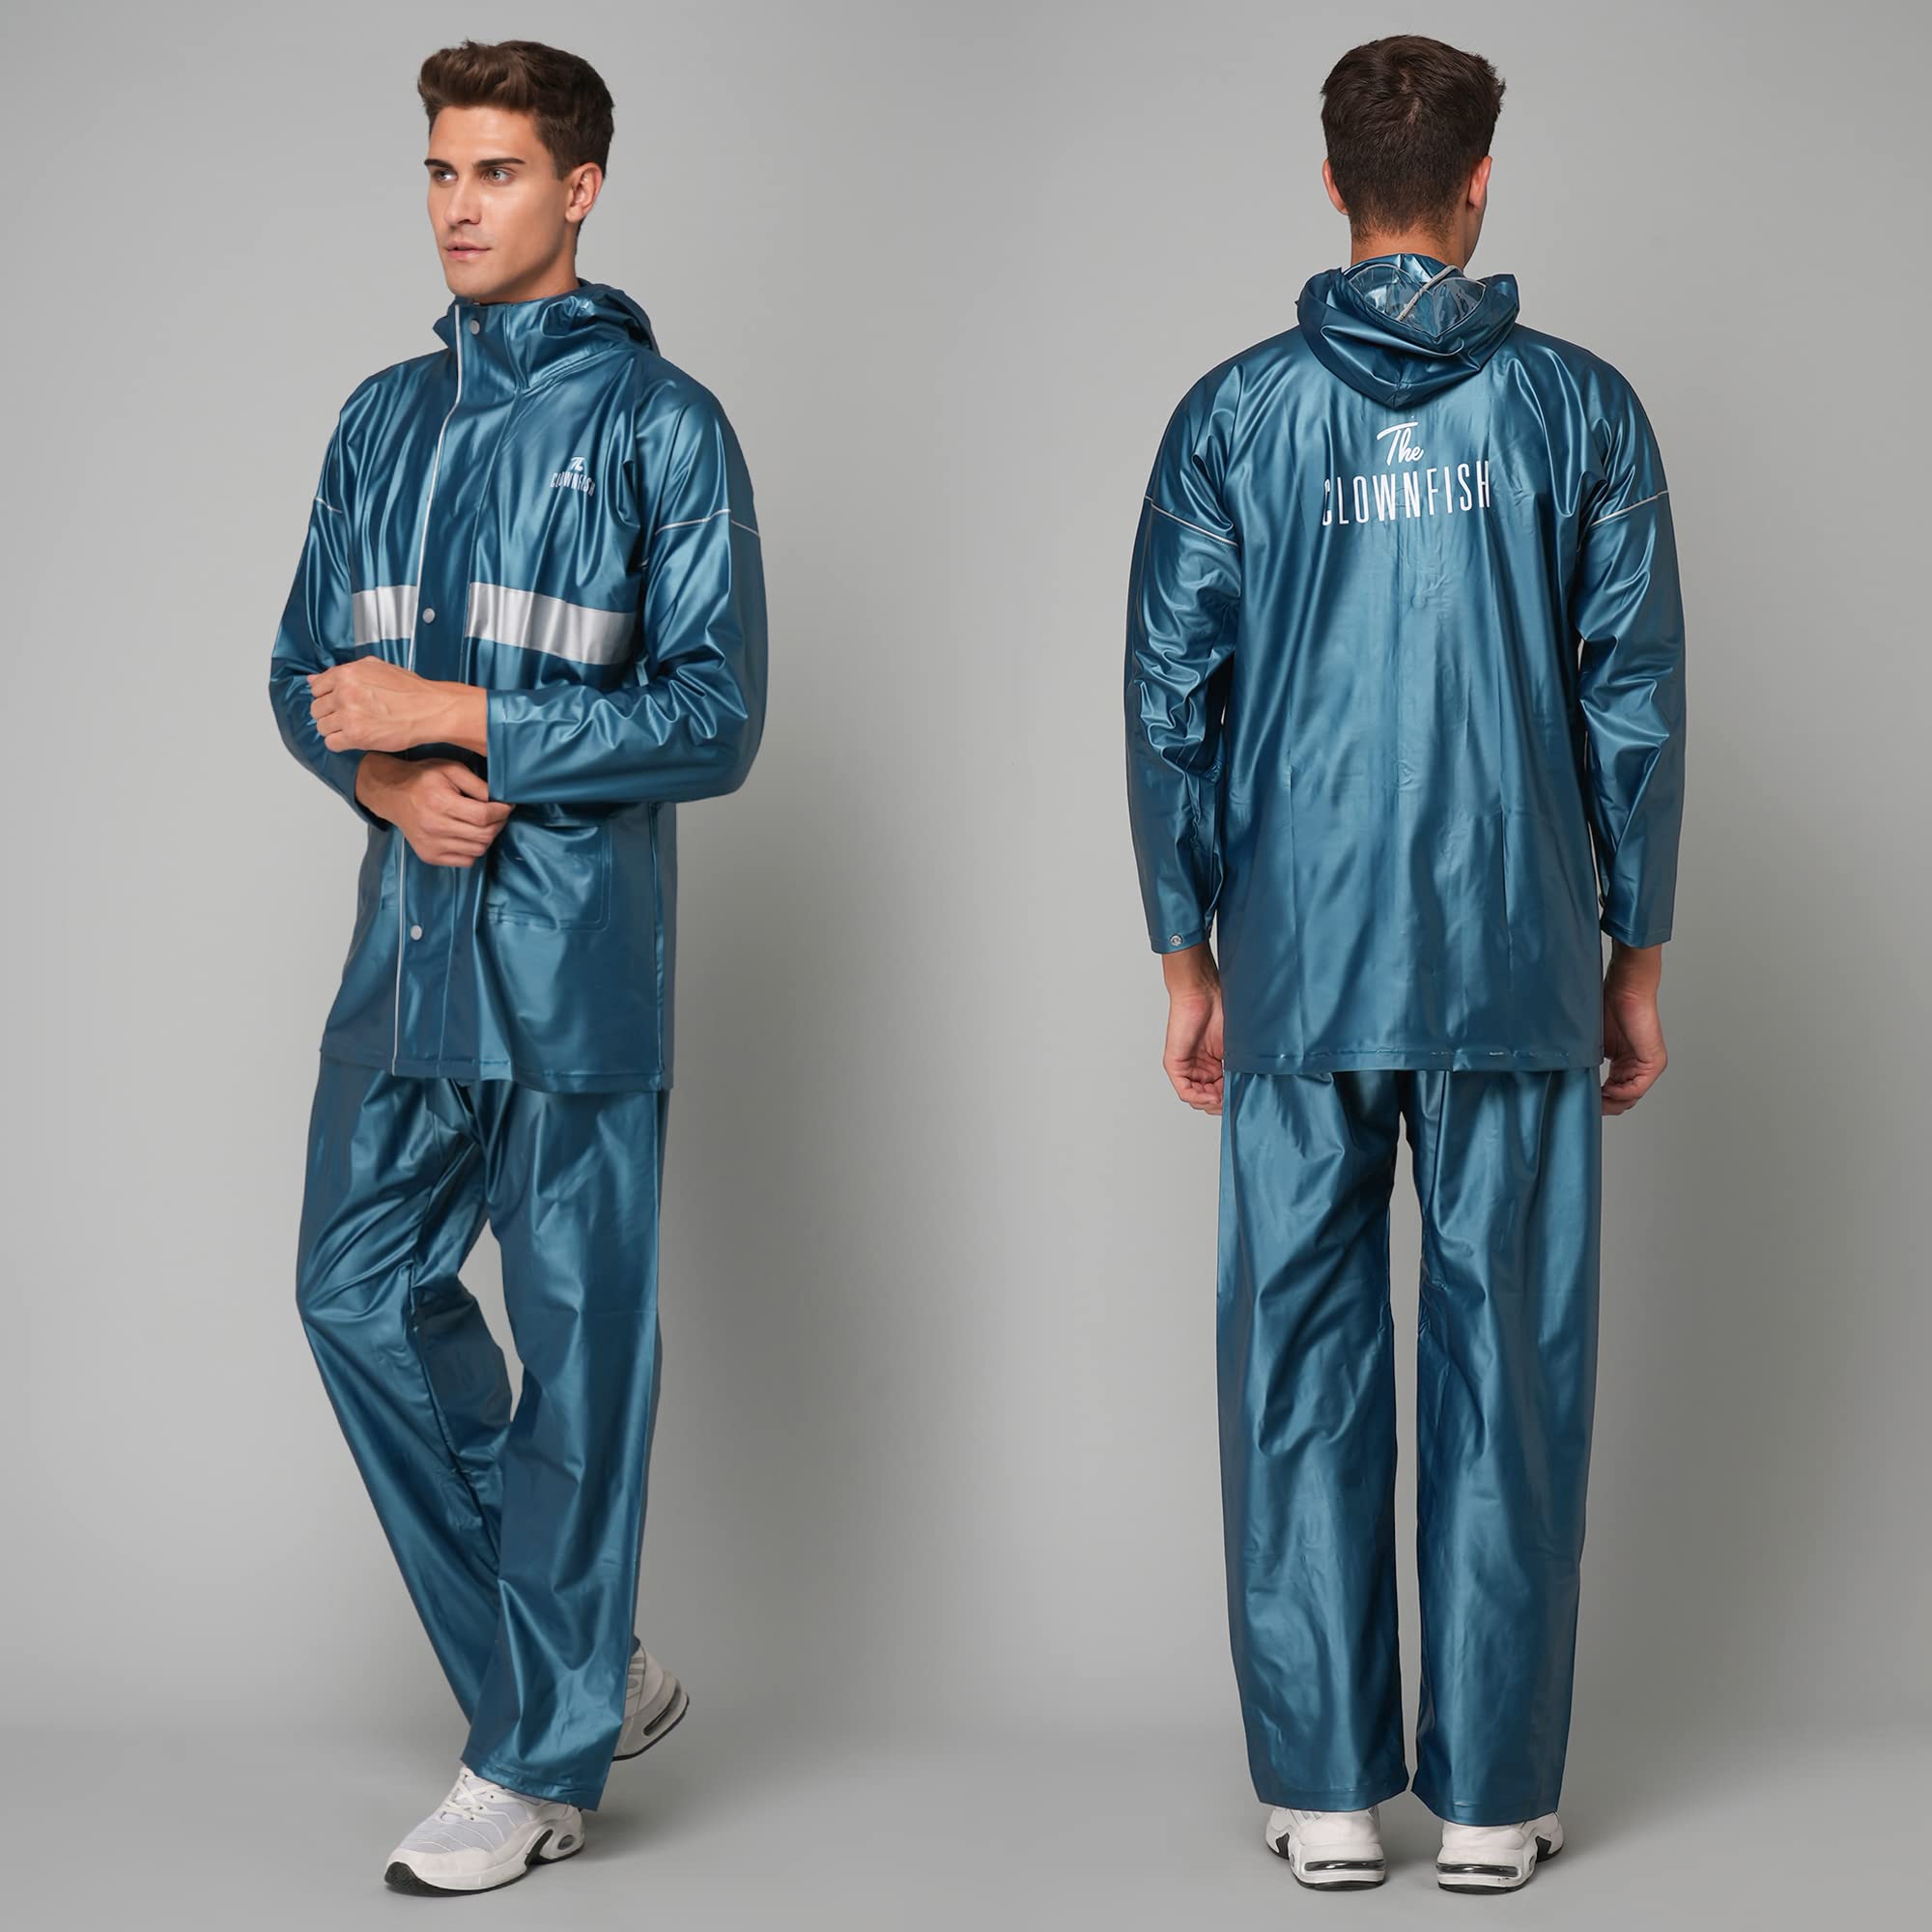 The Clownfish Rain Coat For Men Waterproof For Bike Raincoat With